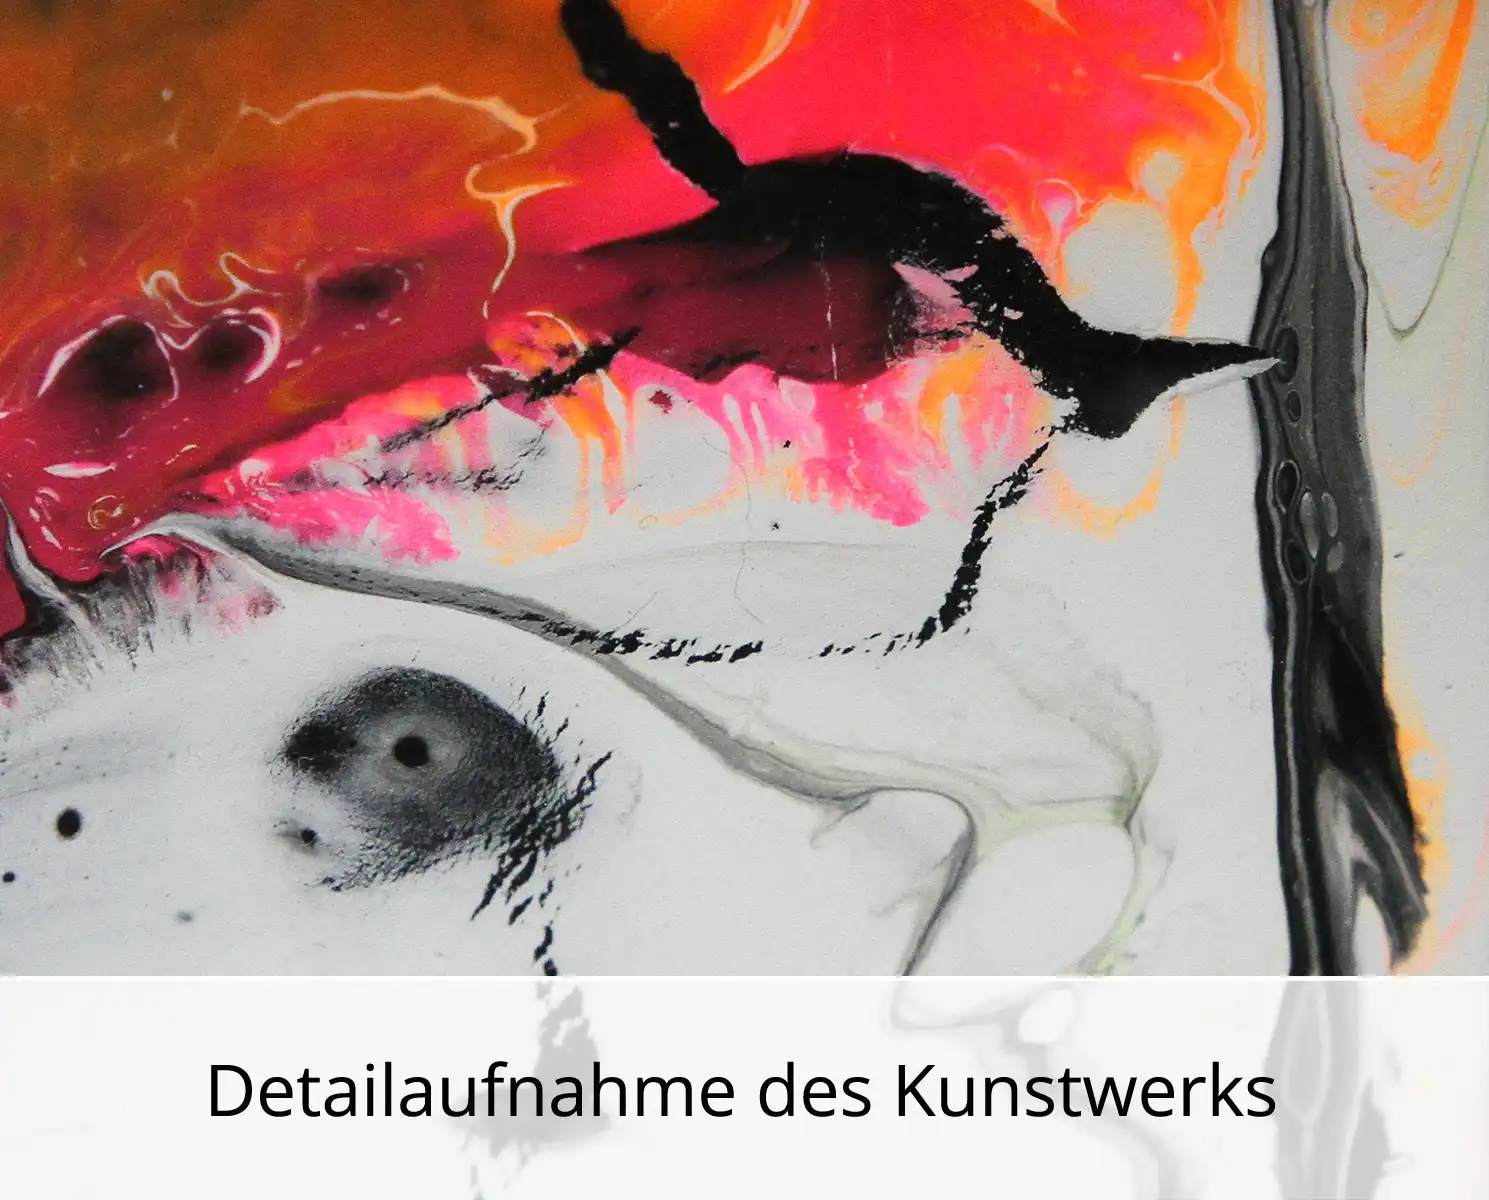 K. Sokoll: "Unikat 4 im Guido Maria Kretschmer Rahmen", Originalgemälde (Unikat)